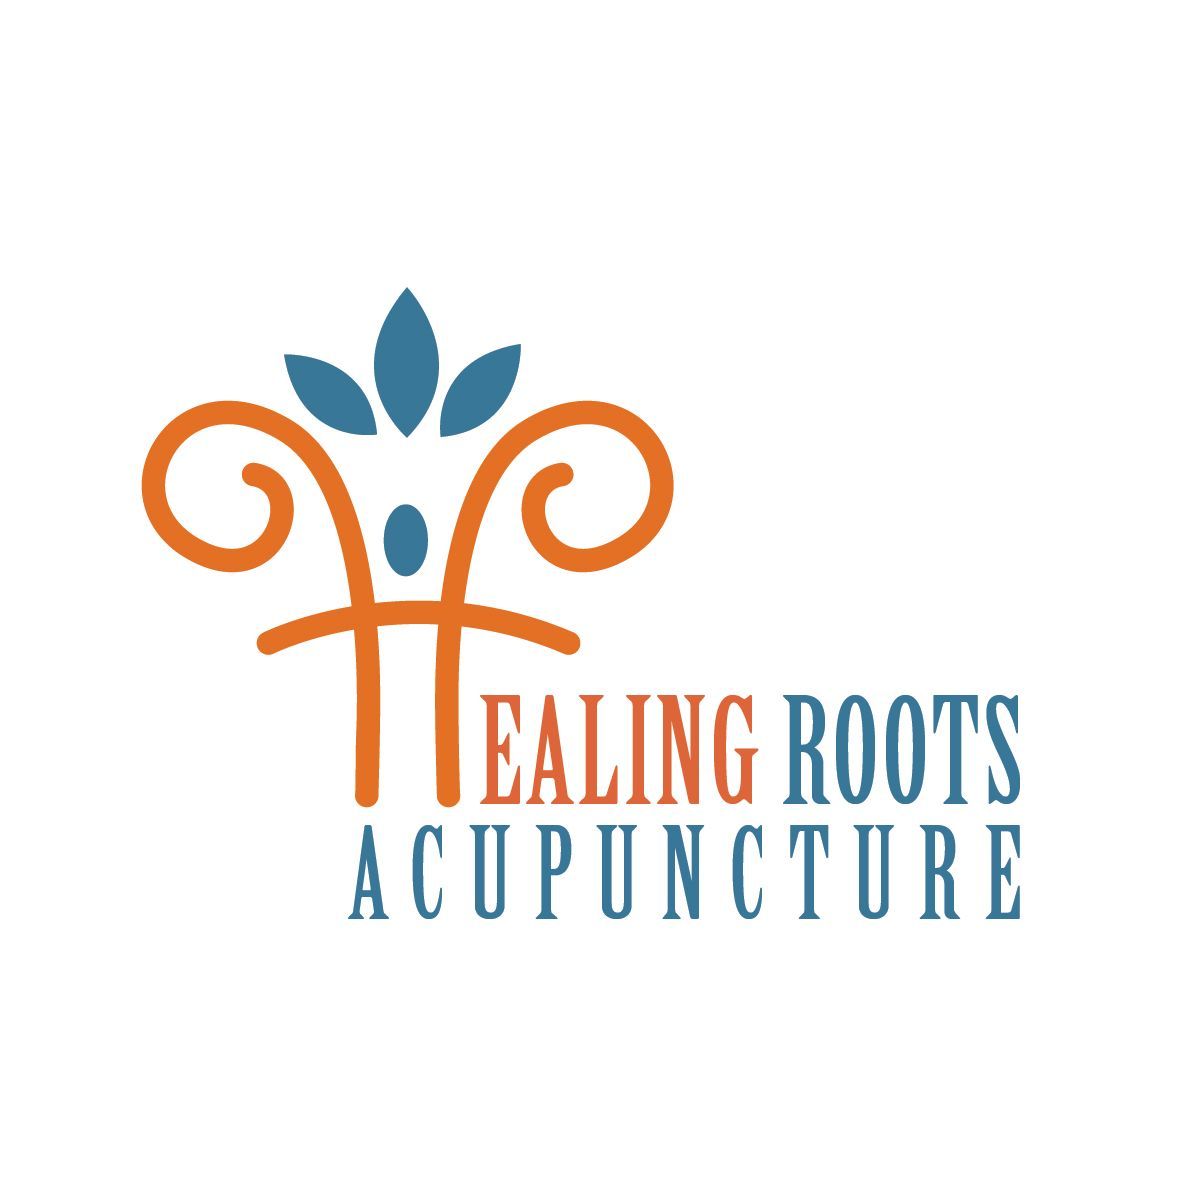 Gallery Photo of Healing Roots Acupuncture
(657) 900-2211
www.healingrootsacu.com